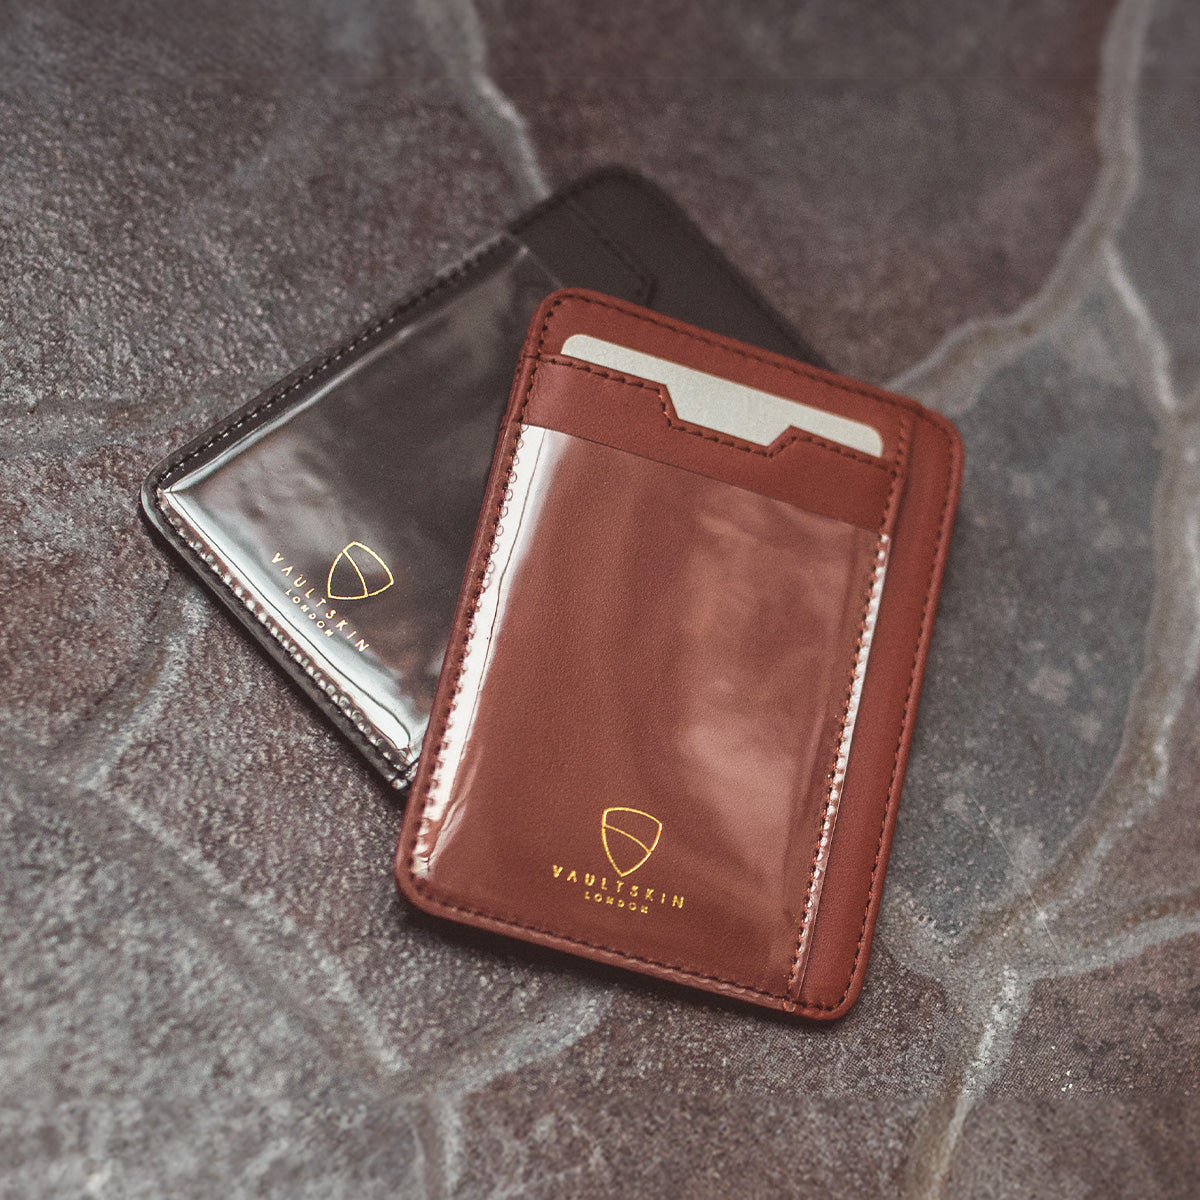 Minimalist design of Brixton leather wallet